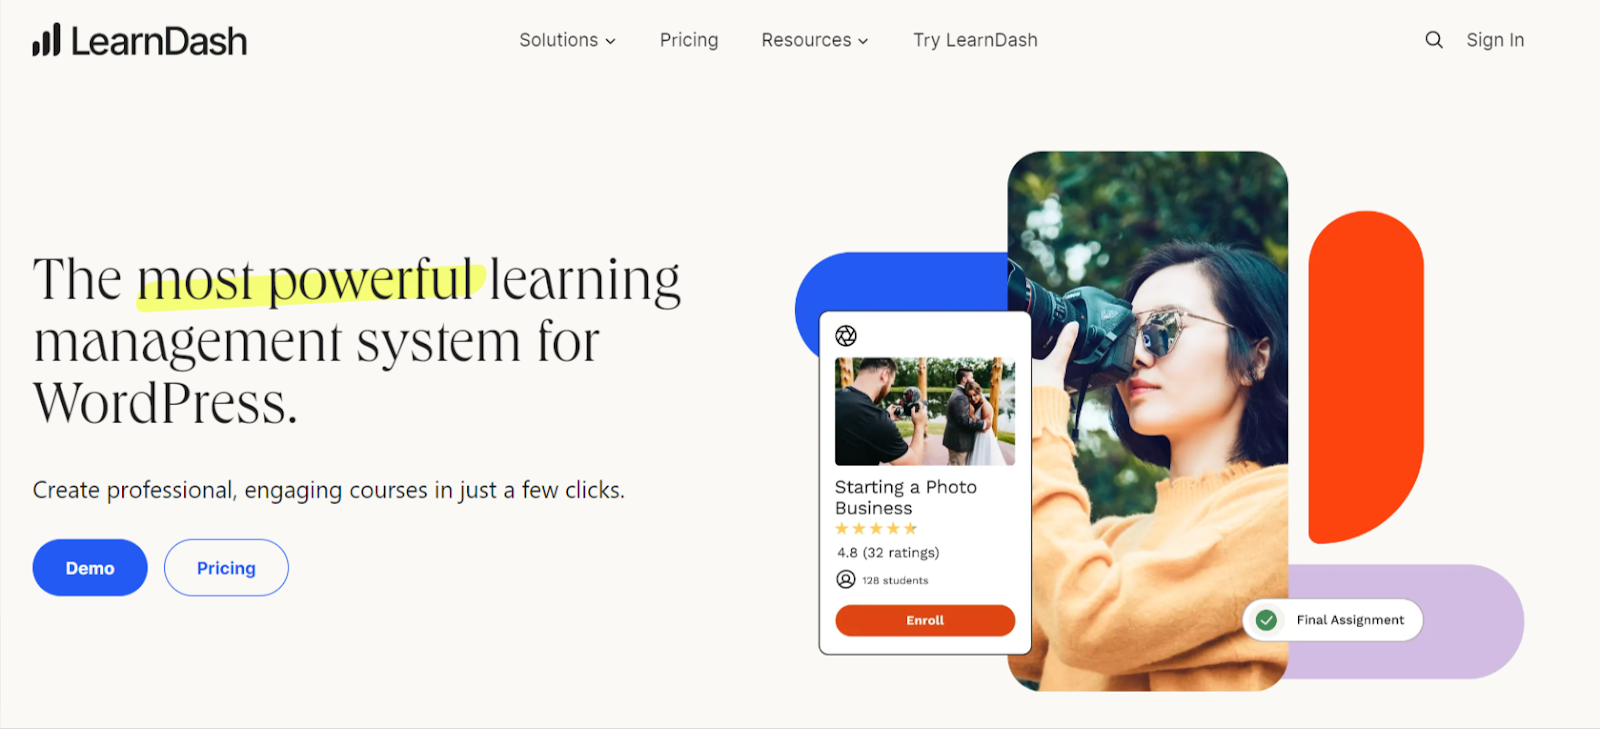 learndash homepage